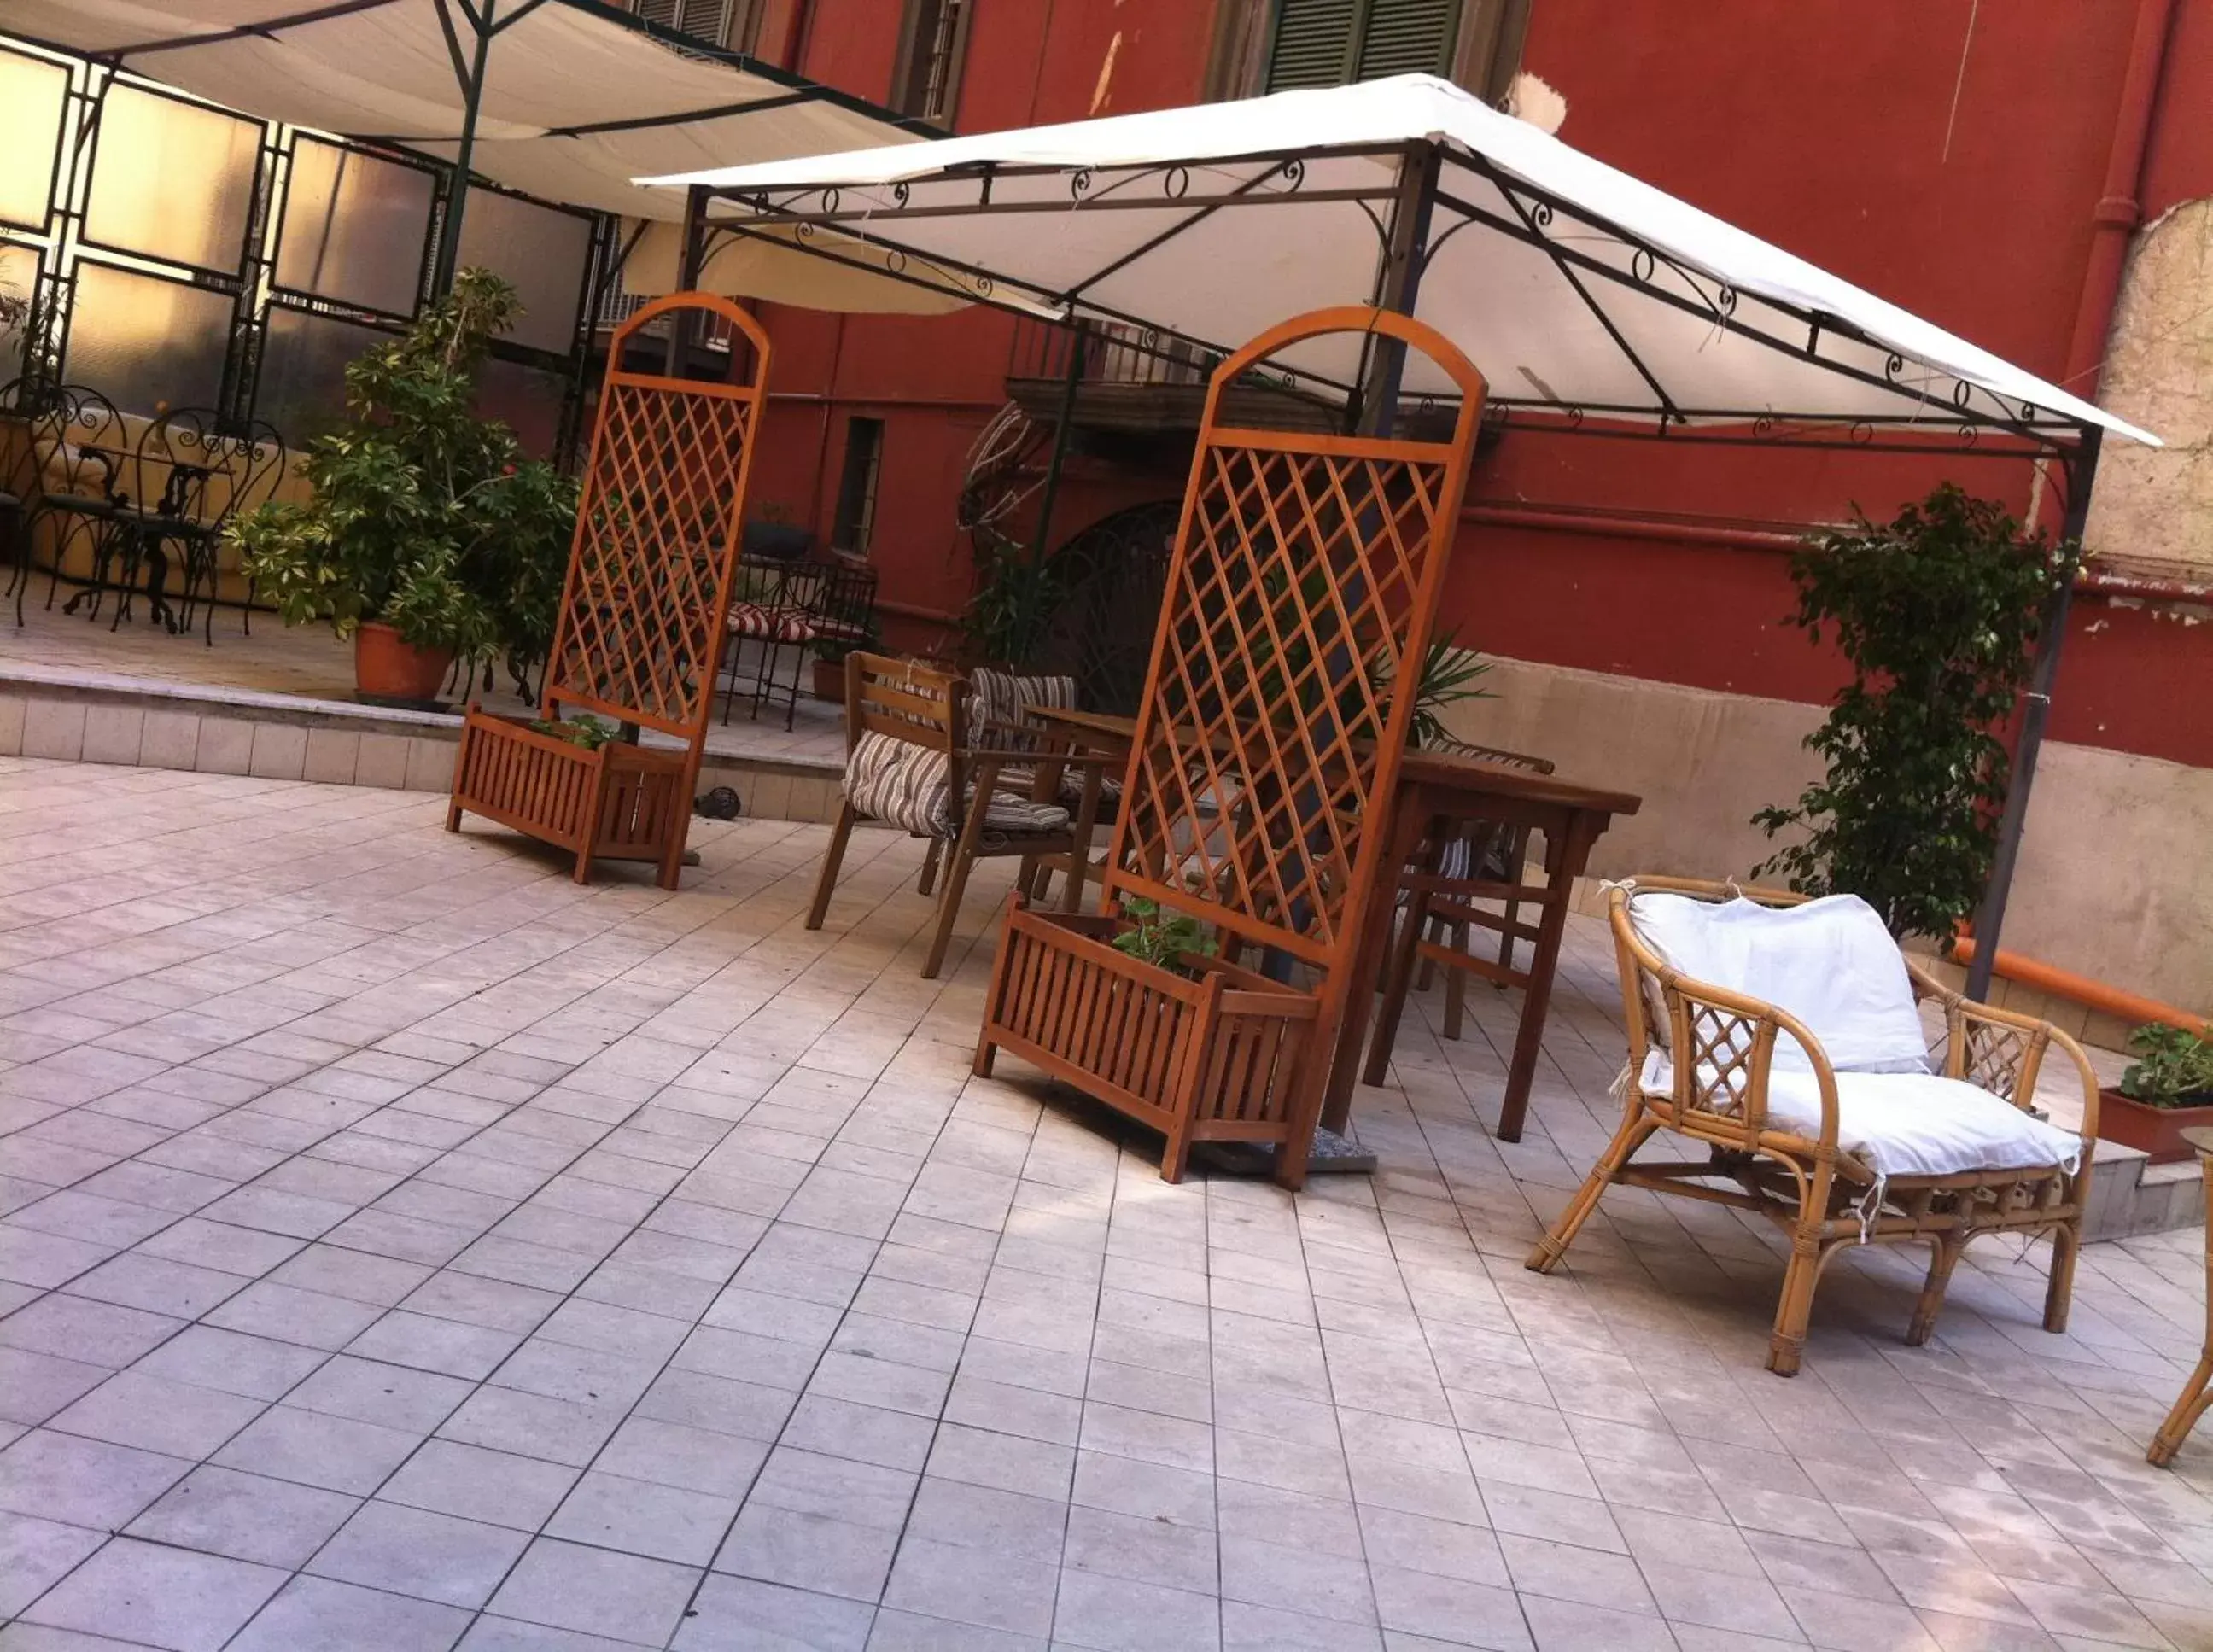 Balcony/Terrace, Patio/Outdoor Area in B&B Sansevero Naples